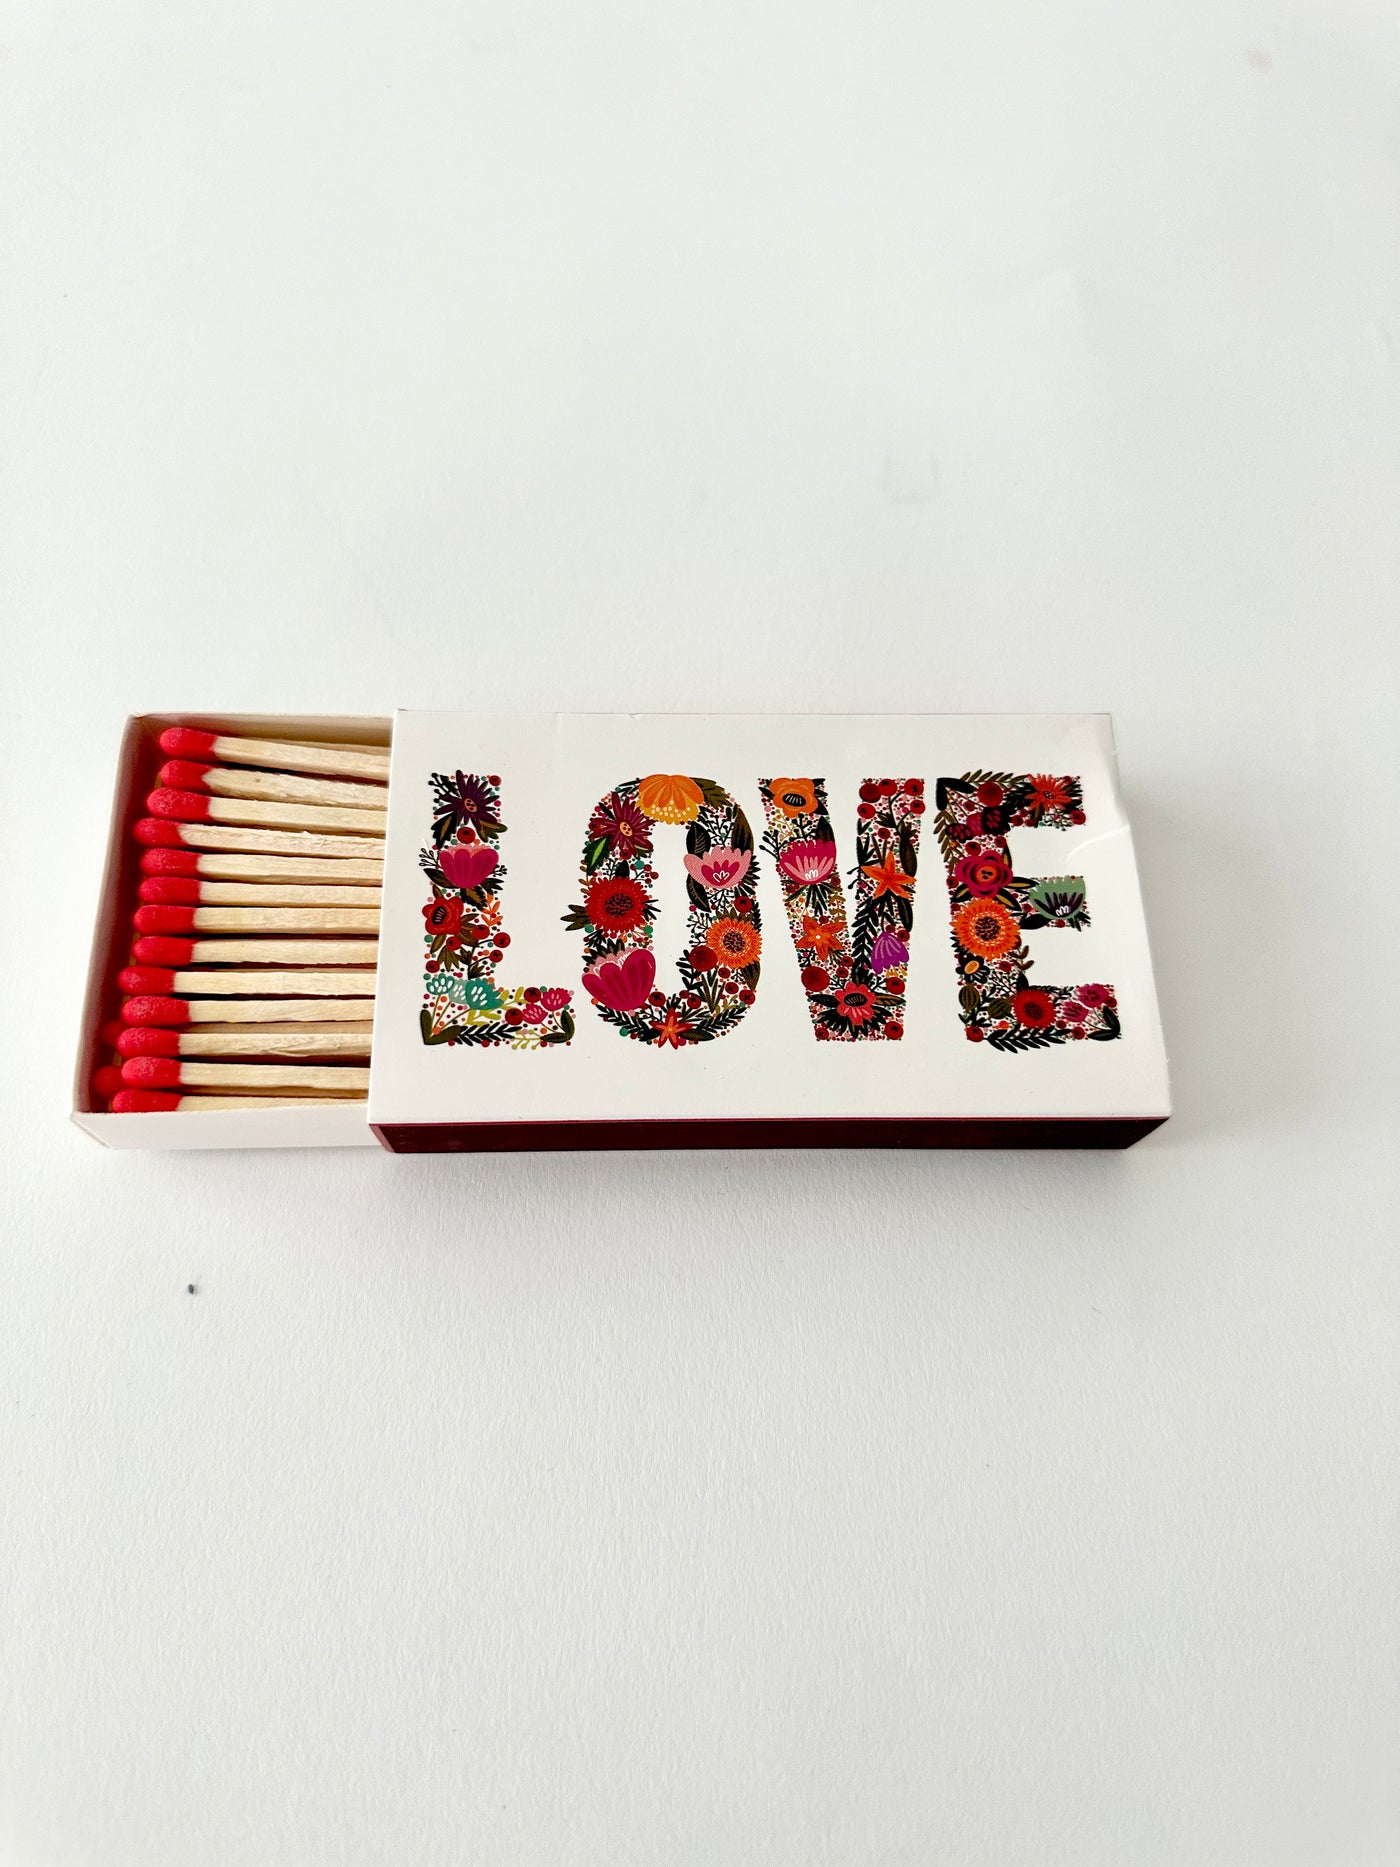 Love Match Stick